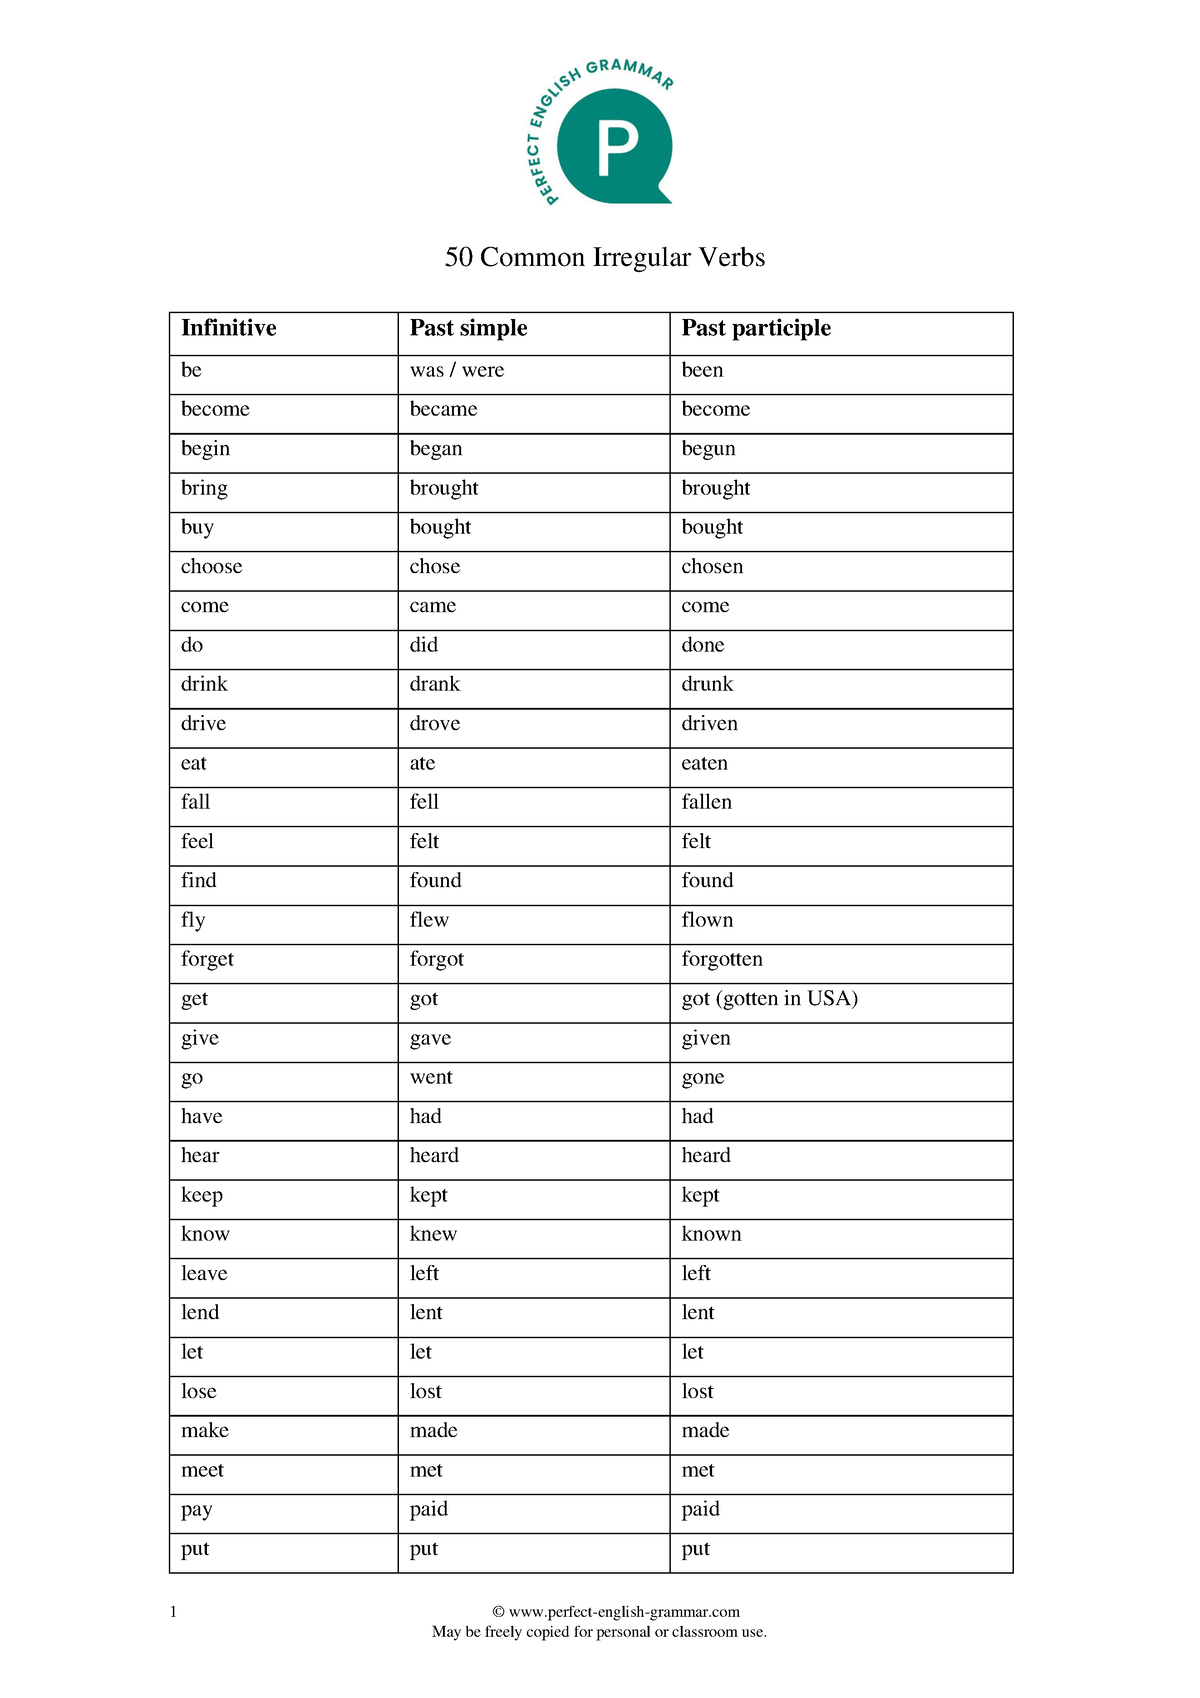 Perfect English Grammar Irregular Verbs List